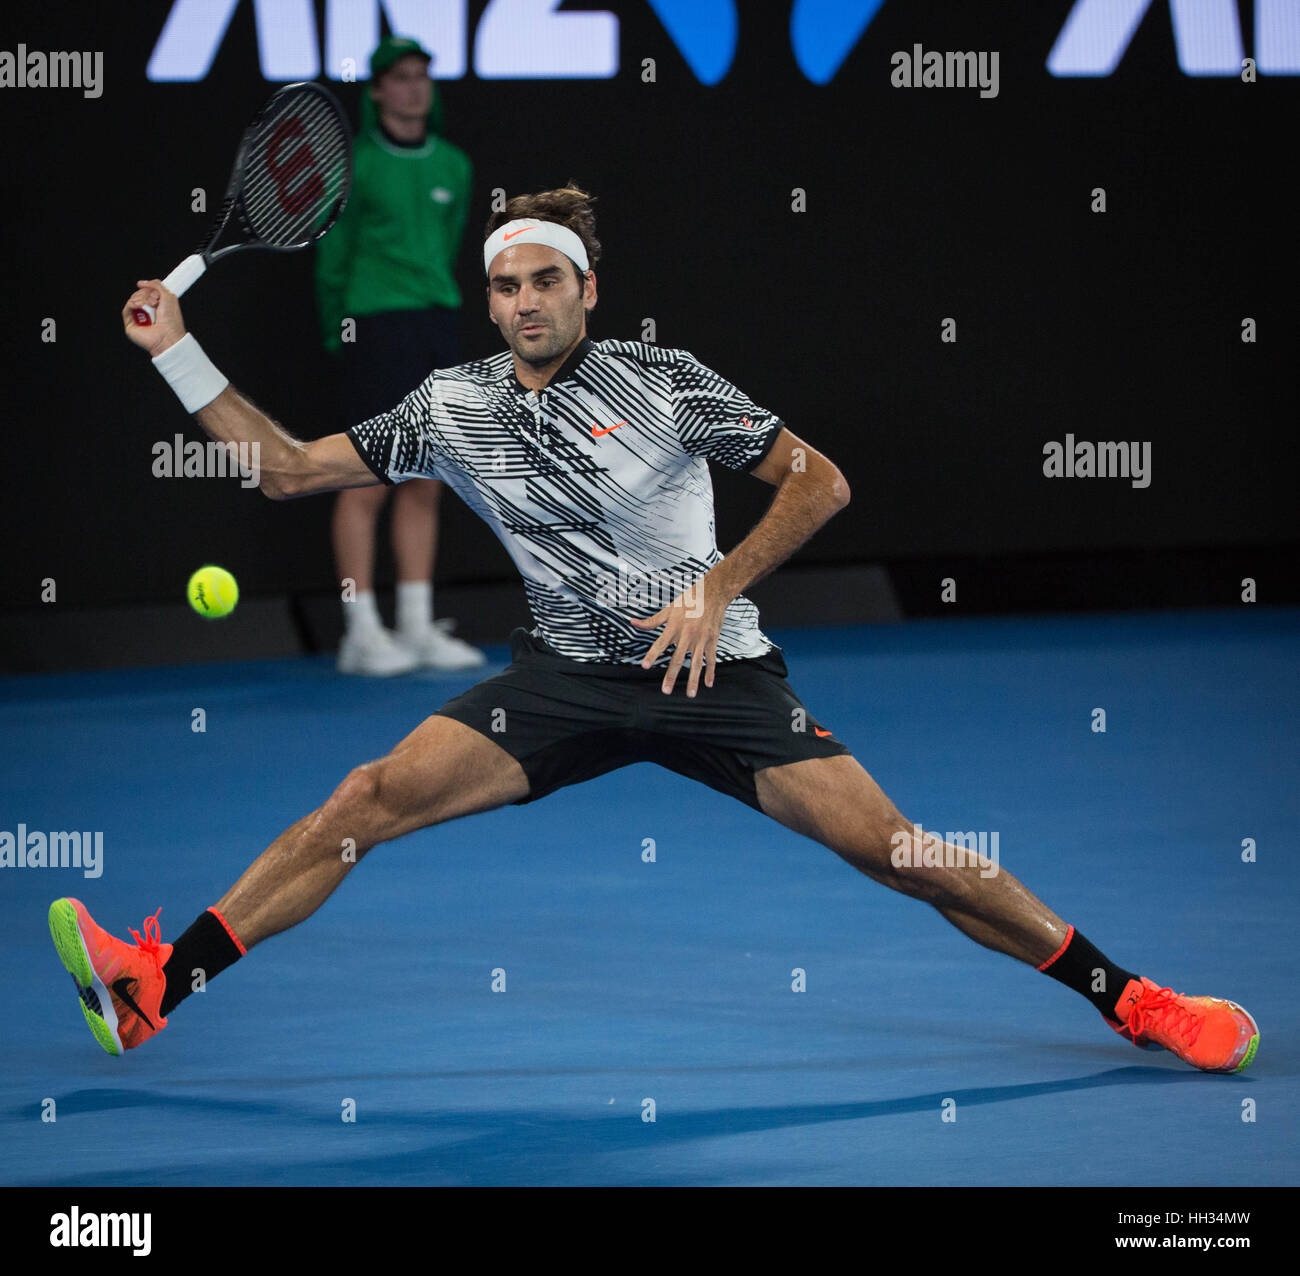 Australia. 16th Jan, 2017. Roger Federer Switzerland hits the ball during the men's singles first-round match against Jurgen Melzer of Austria at the Australian Open Tennis Championships in Melbourne, Australia,